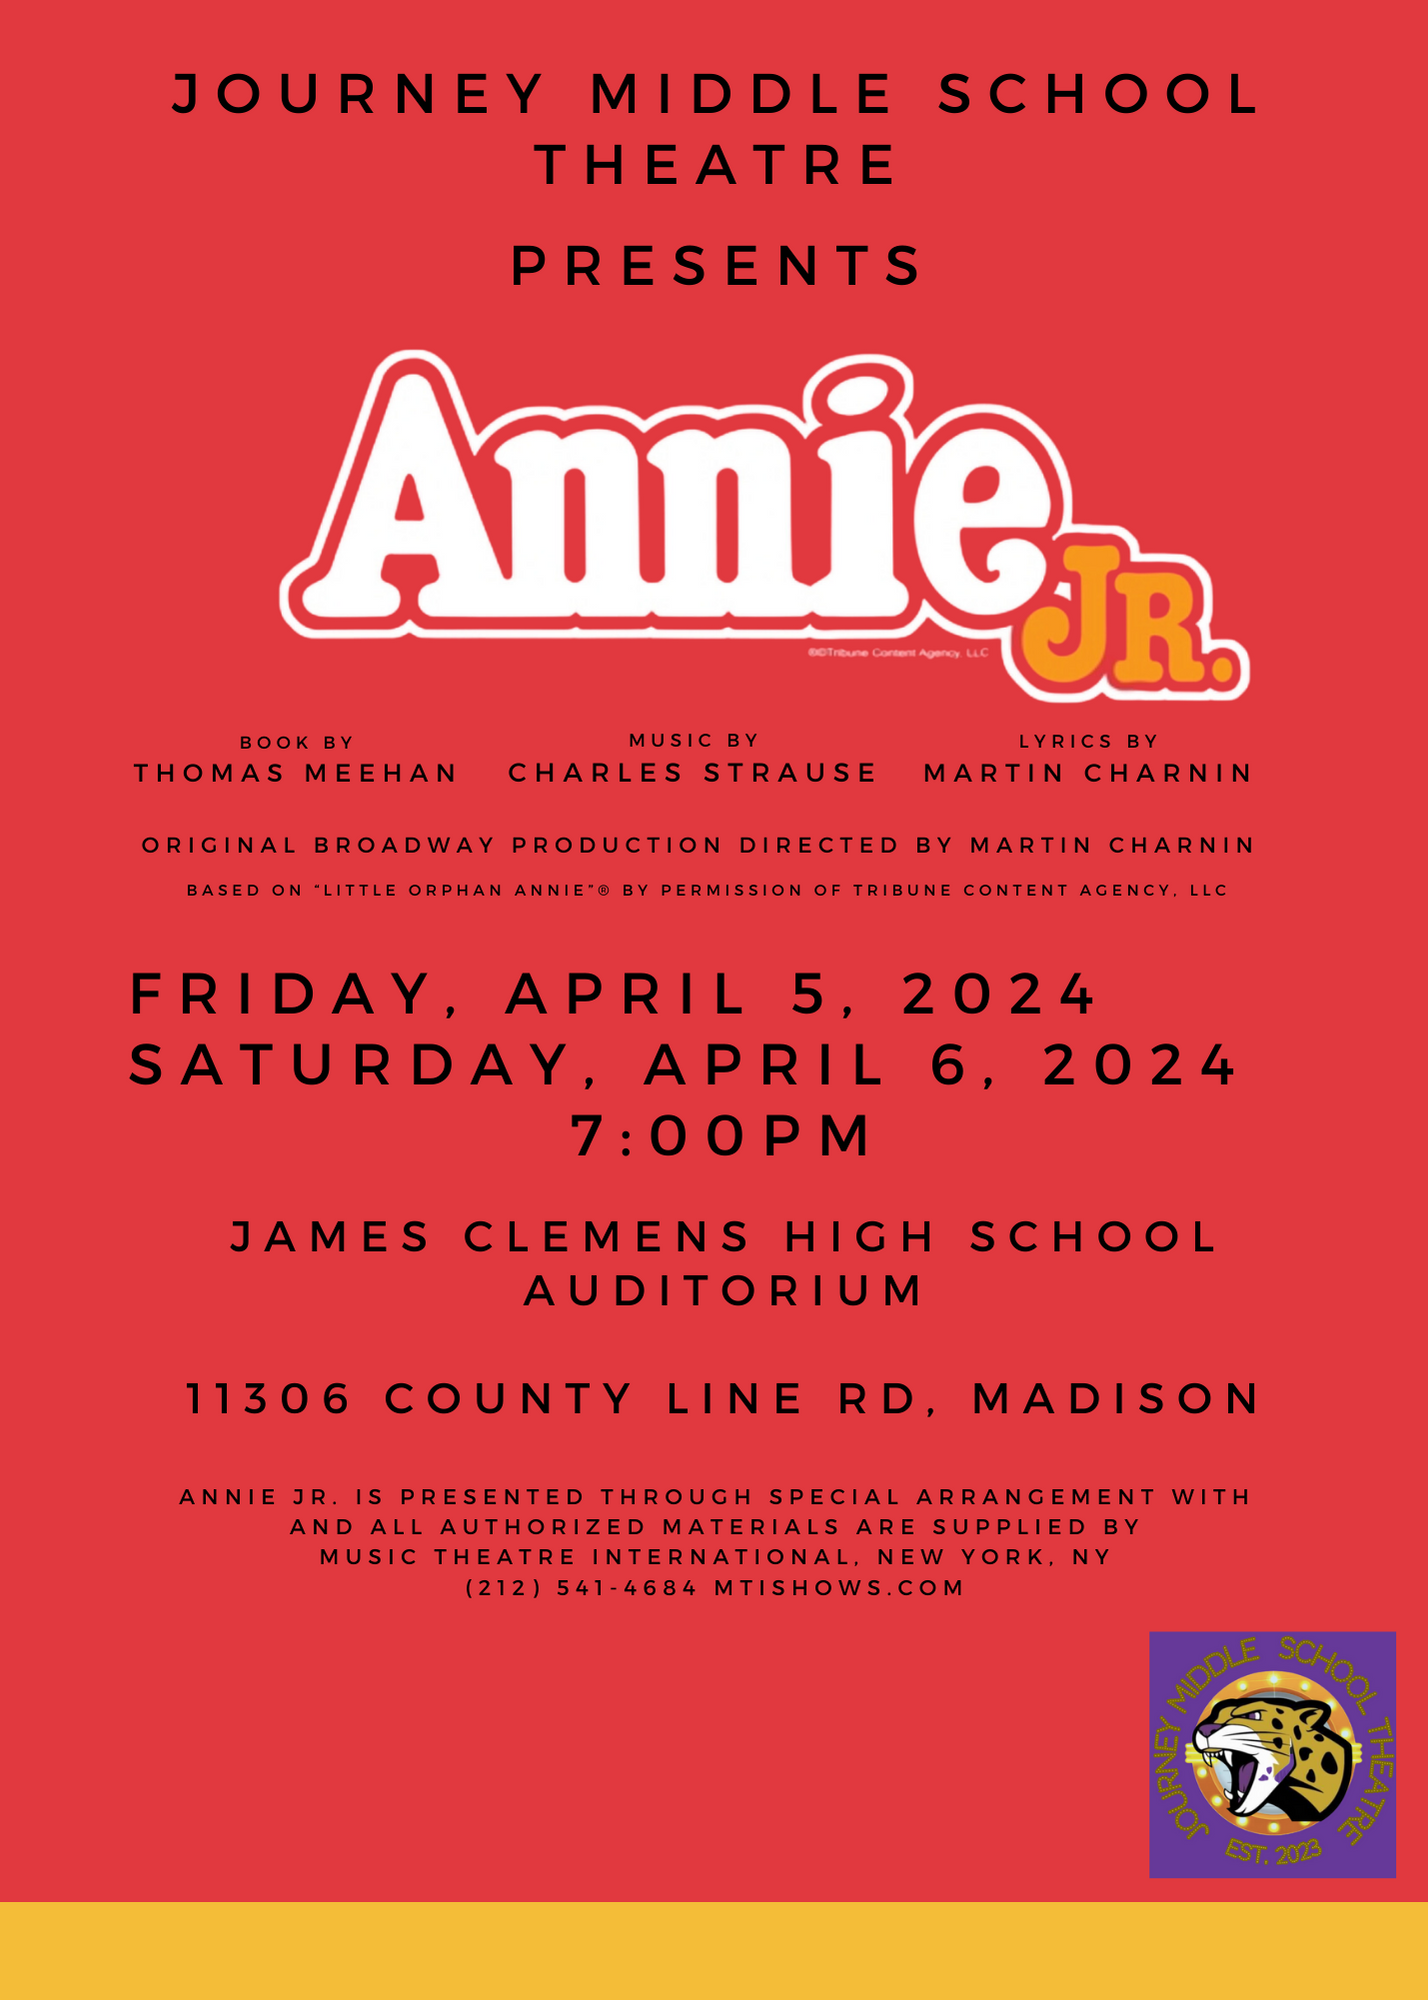 Journey Middle School Theatre presents......Annie Jr.